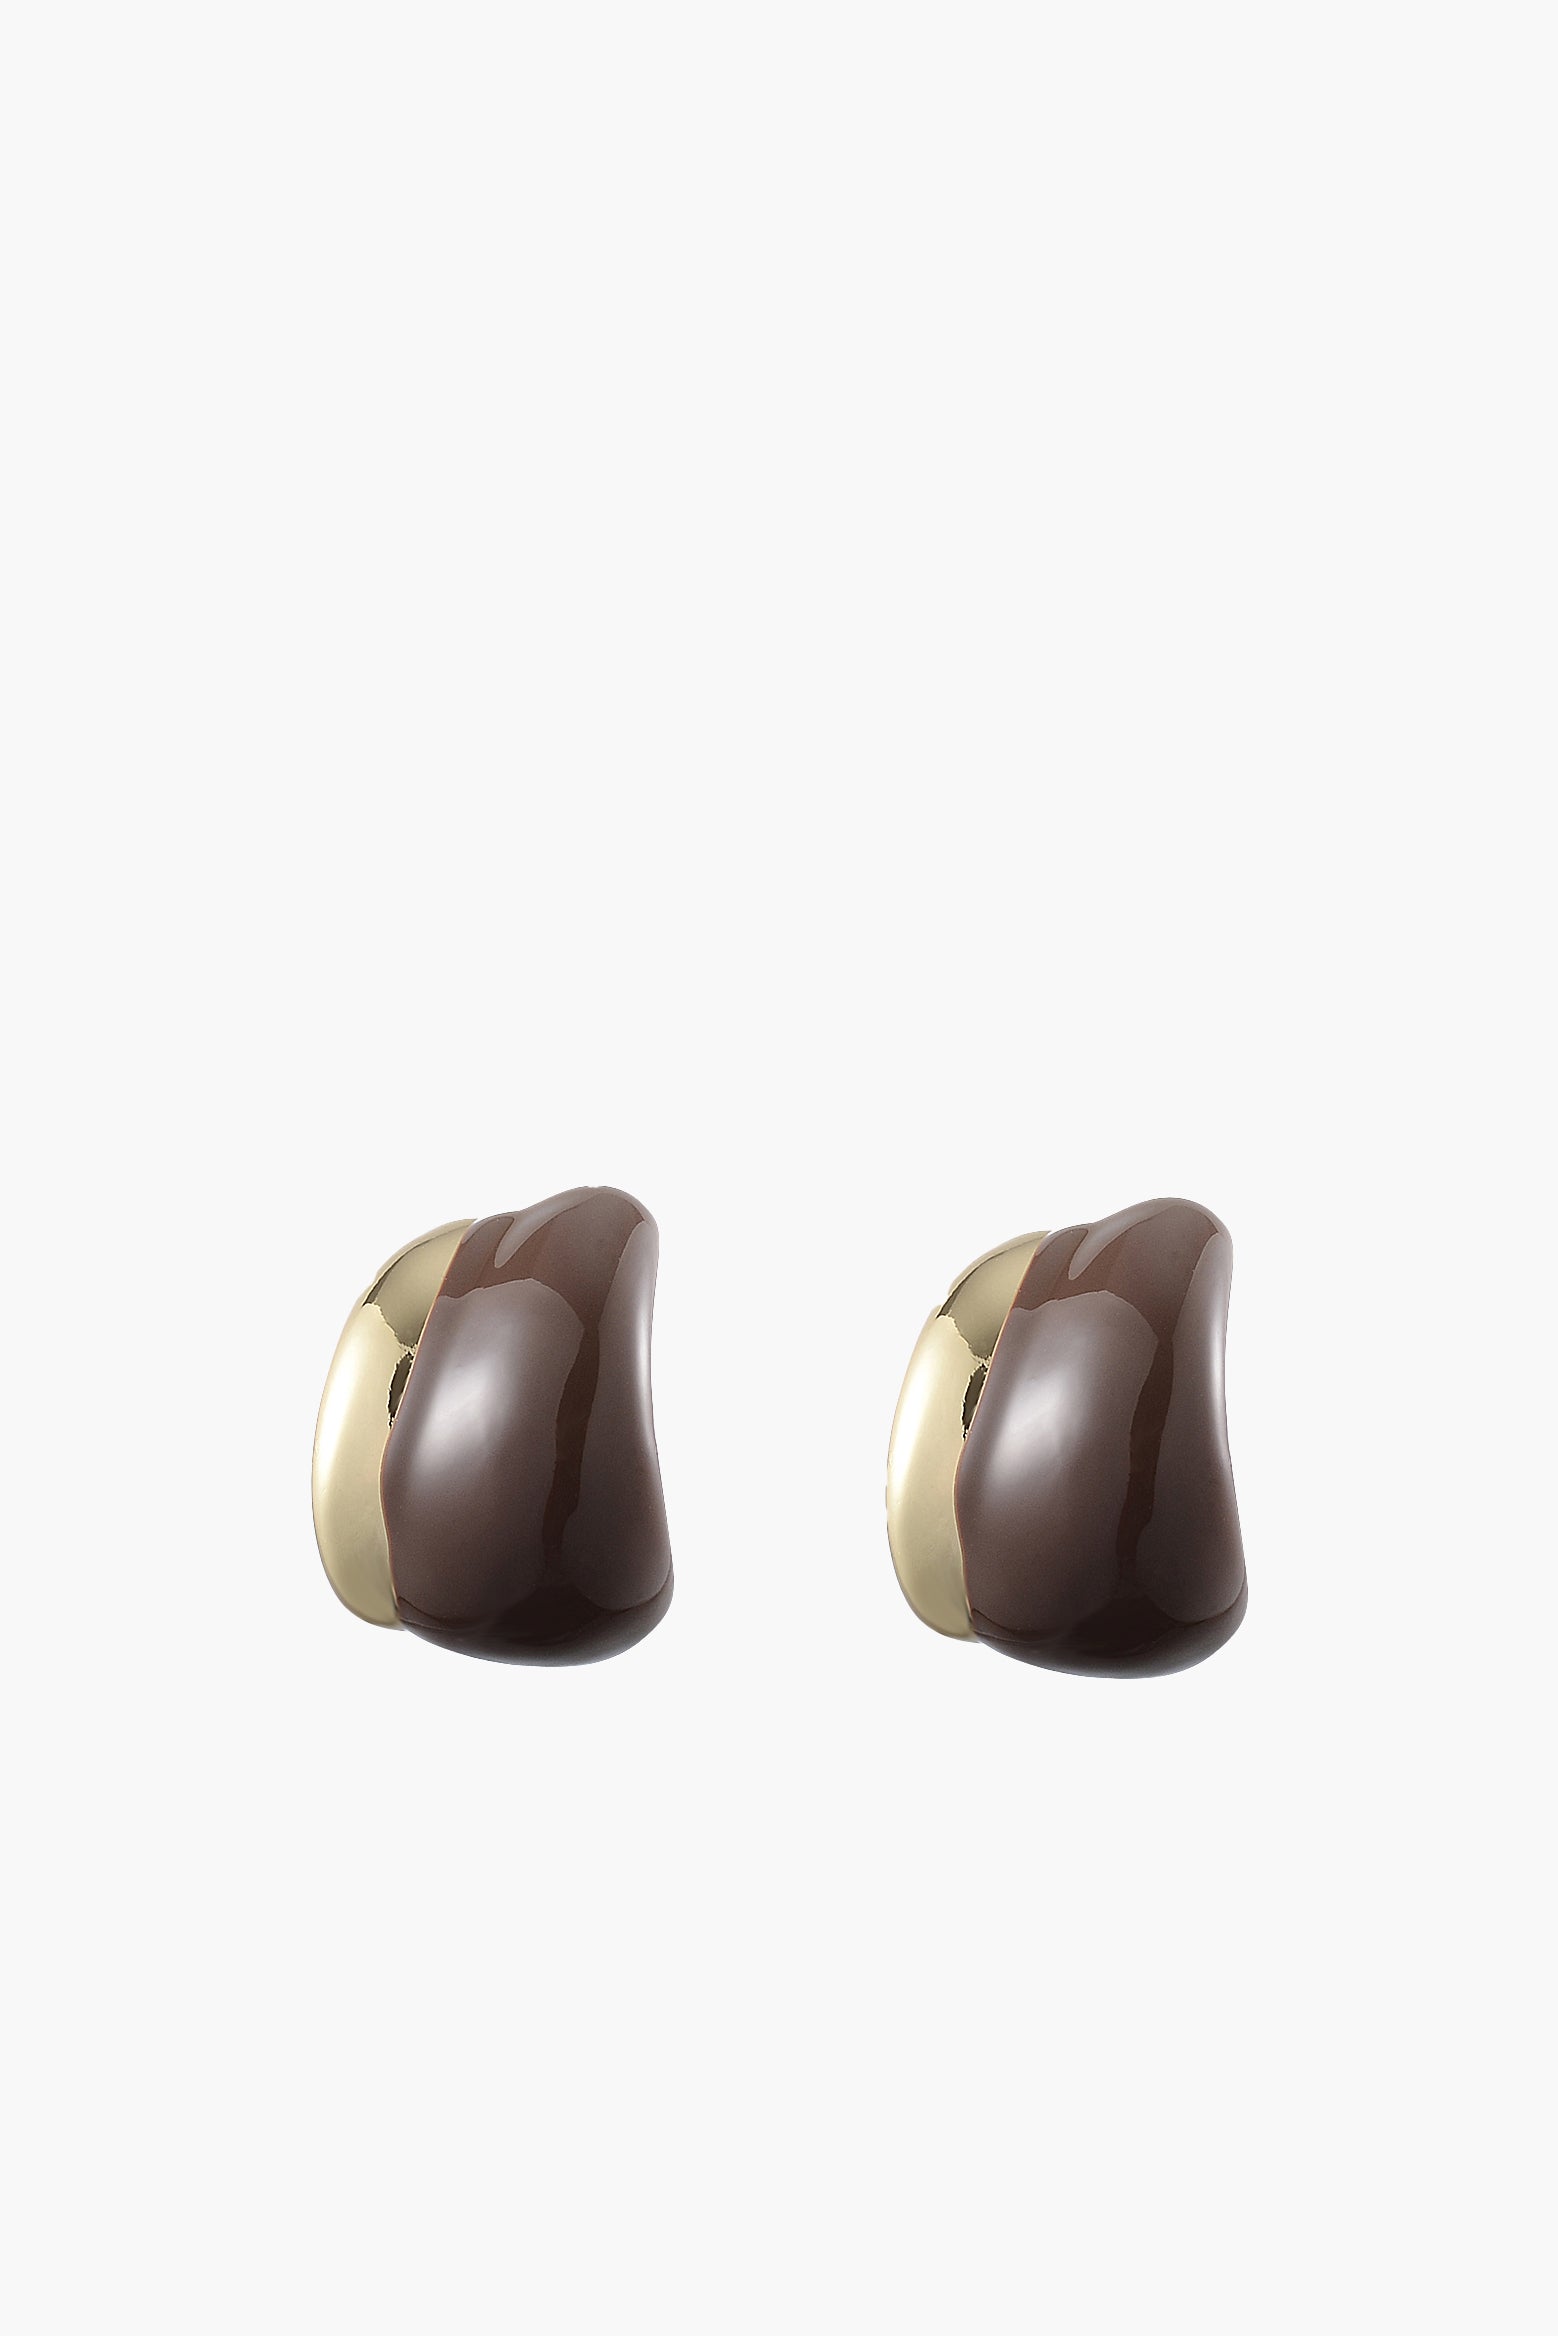 ANNA-ROSSI-Splice-Earring-Cocoa-Gold-The-New-Trend-1